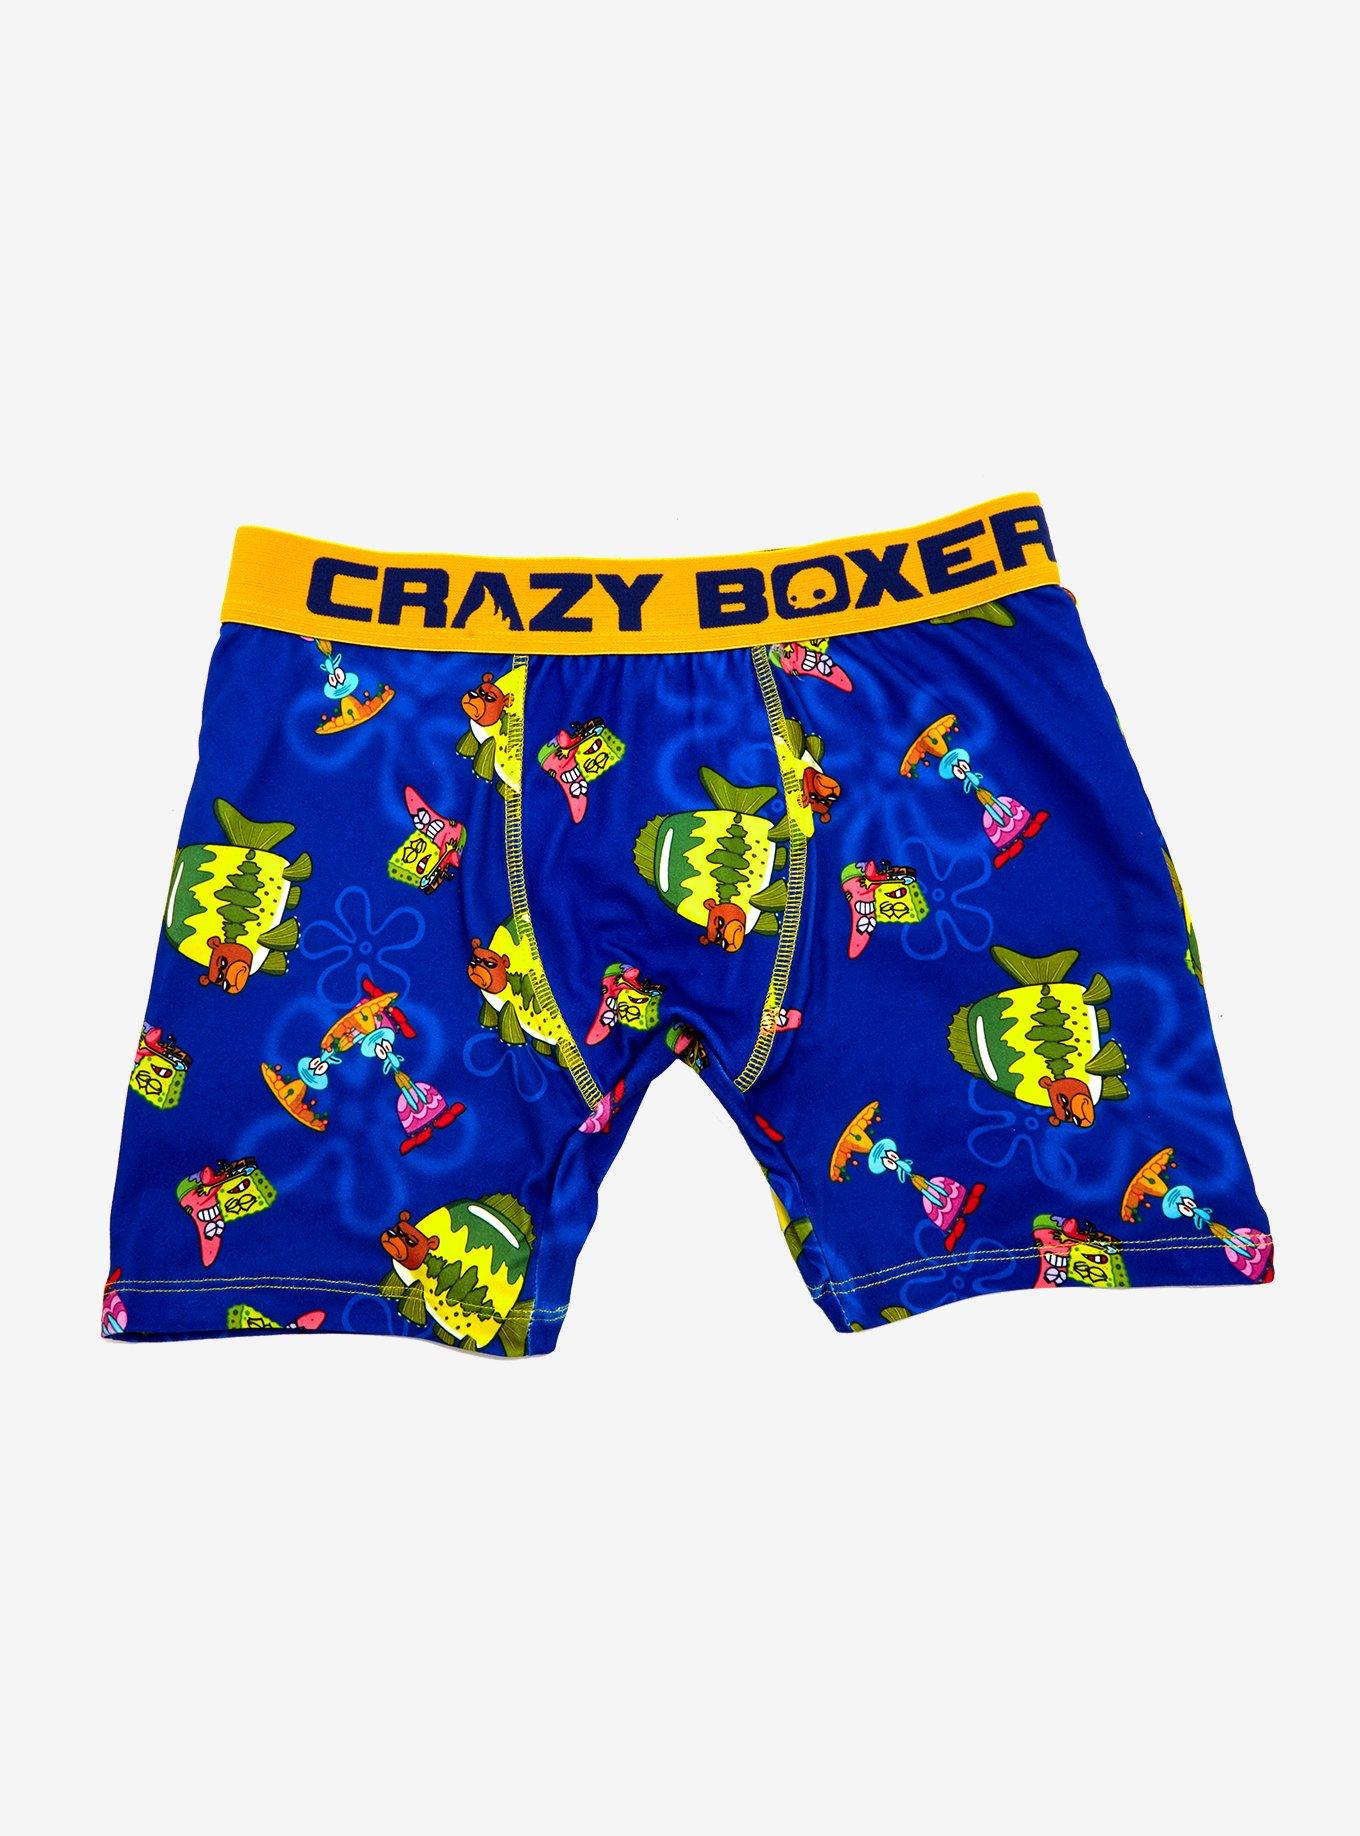 Disney Toy Story Crazy Boxers Men's Boxer Briefs  Mens boxer, Men's boxer  briefs, Toy story characters